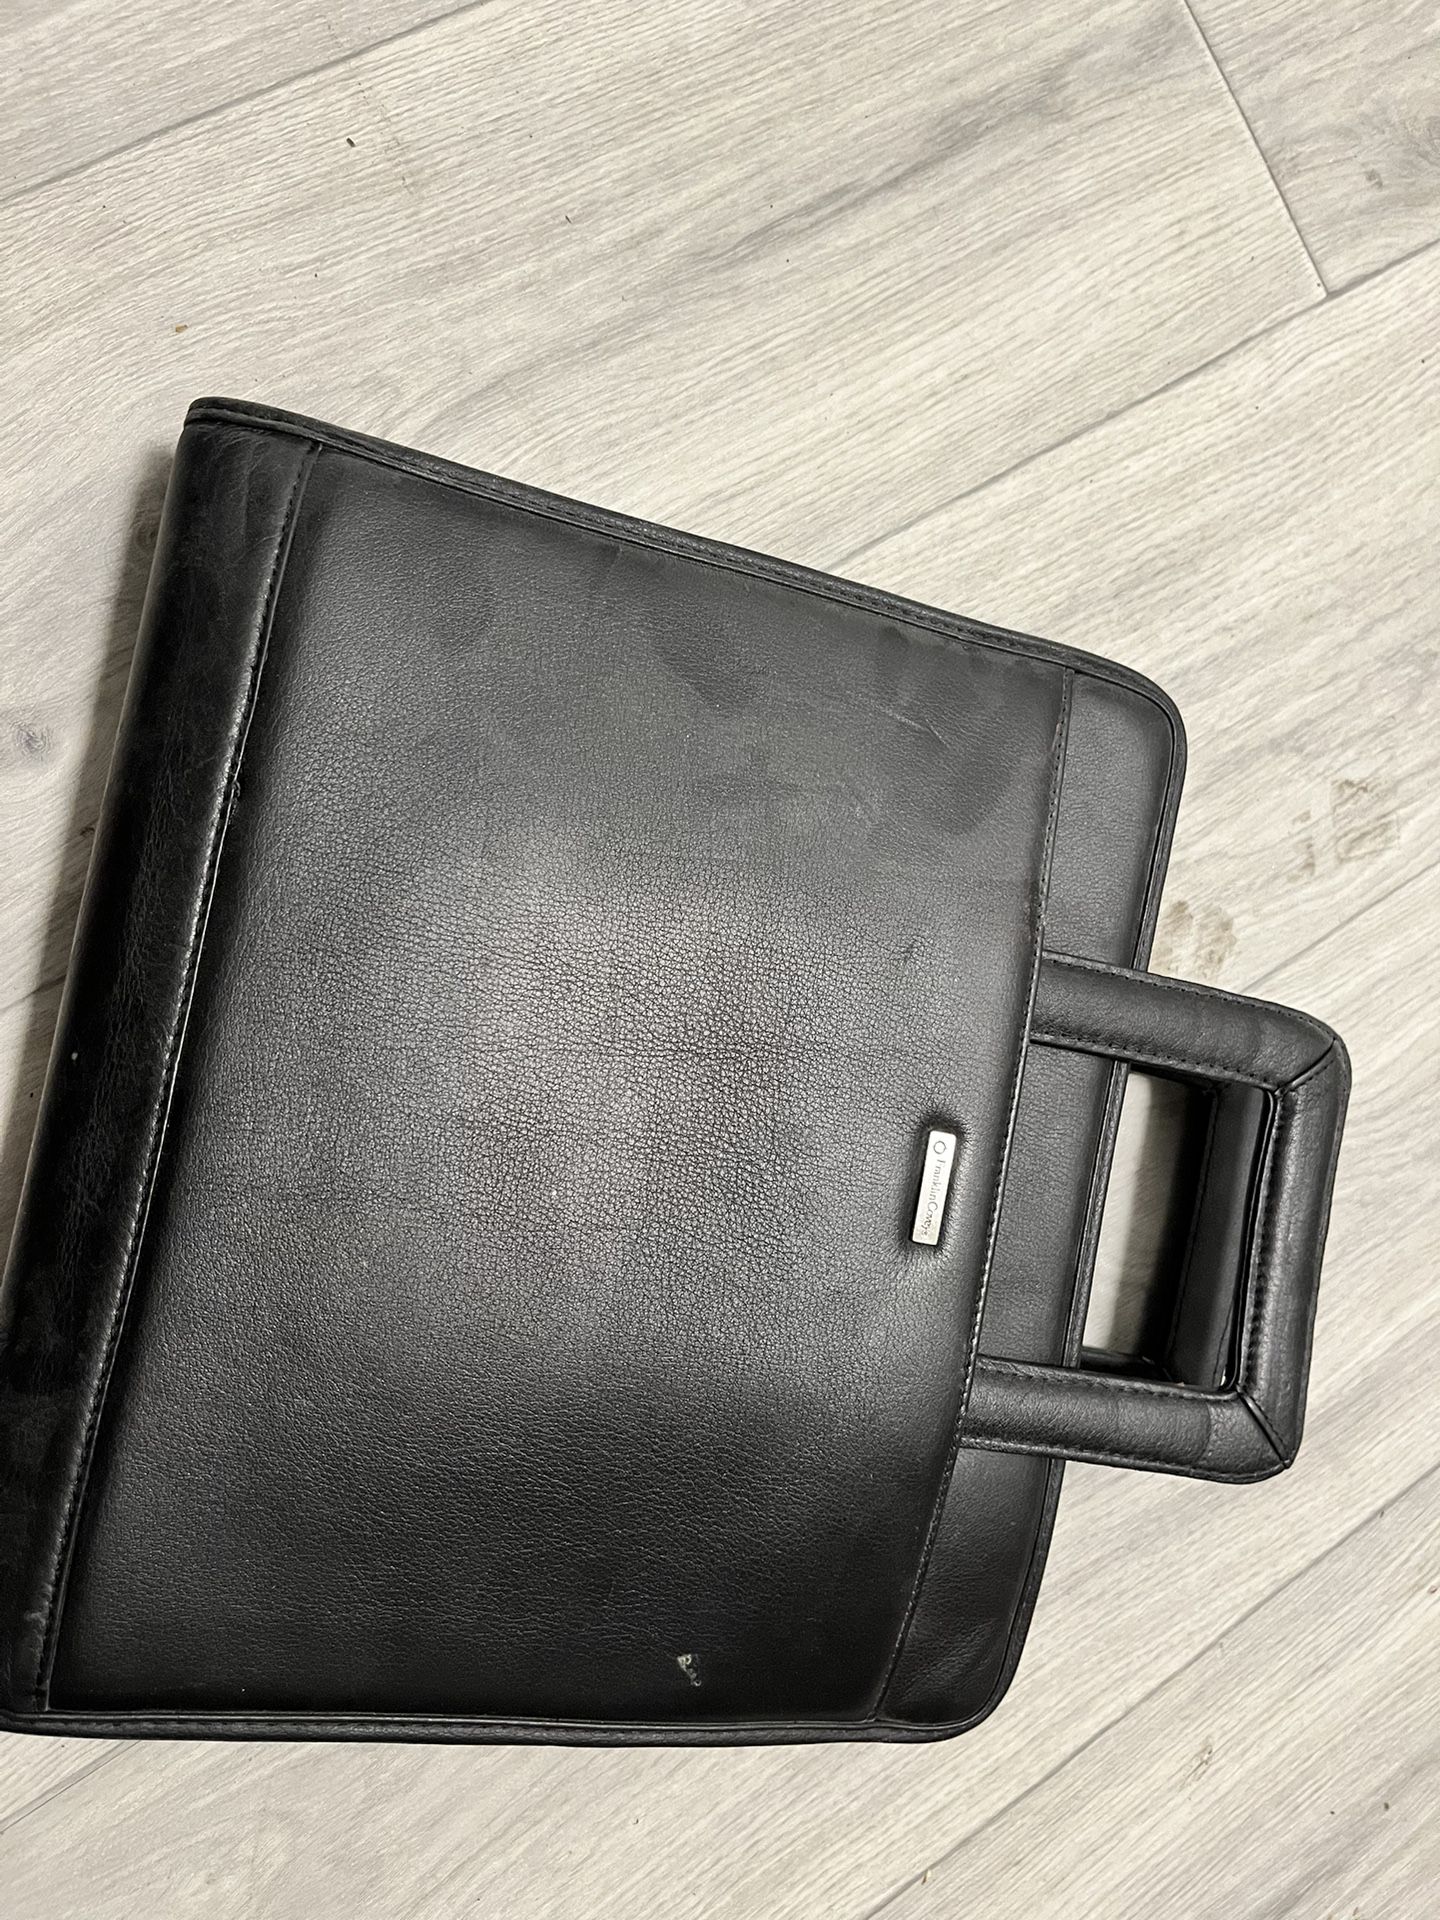 Franklin Covey Leather Folder Brief Case Bag New Portfolio